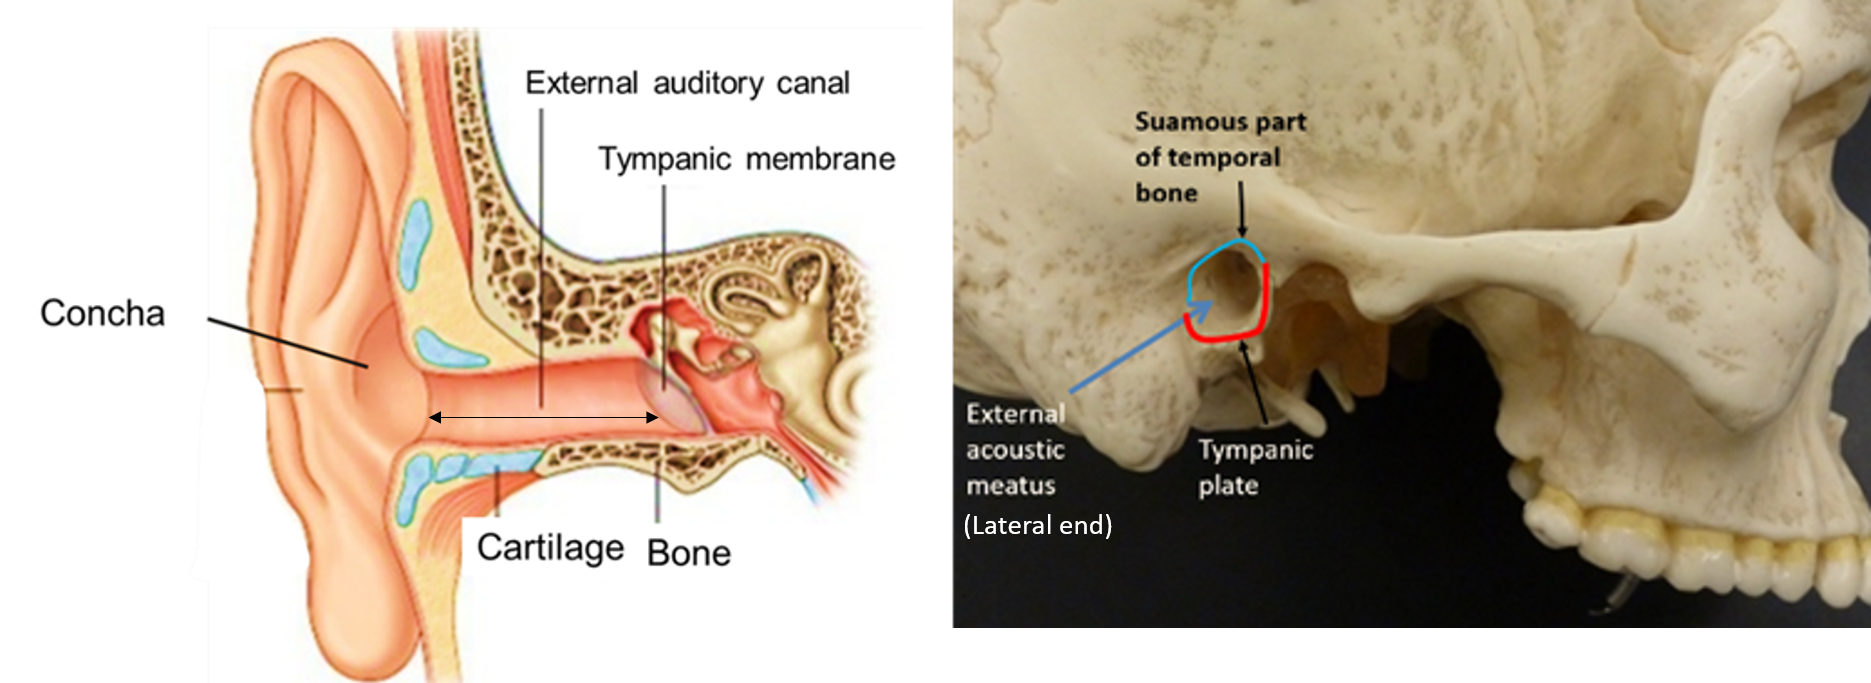 bony and cartilaginous parts of external auditory meatus